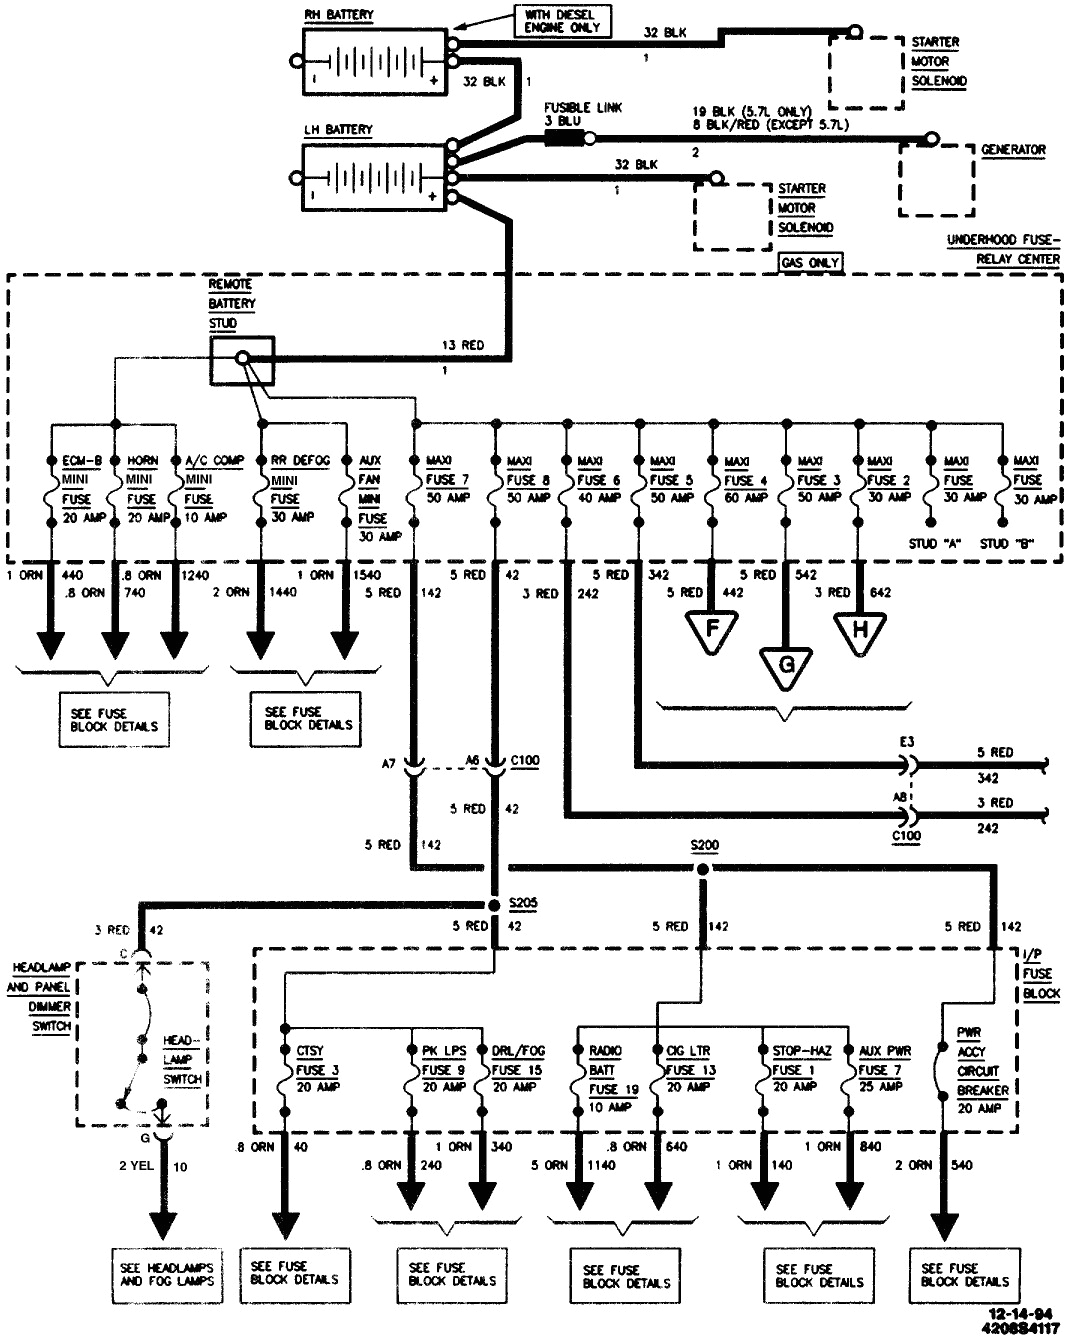 wiring diagram for 1995 chevy silverado wiring diagram files stereo wiring diagram for 95 chevy truck